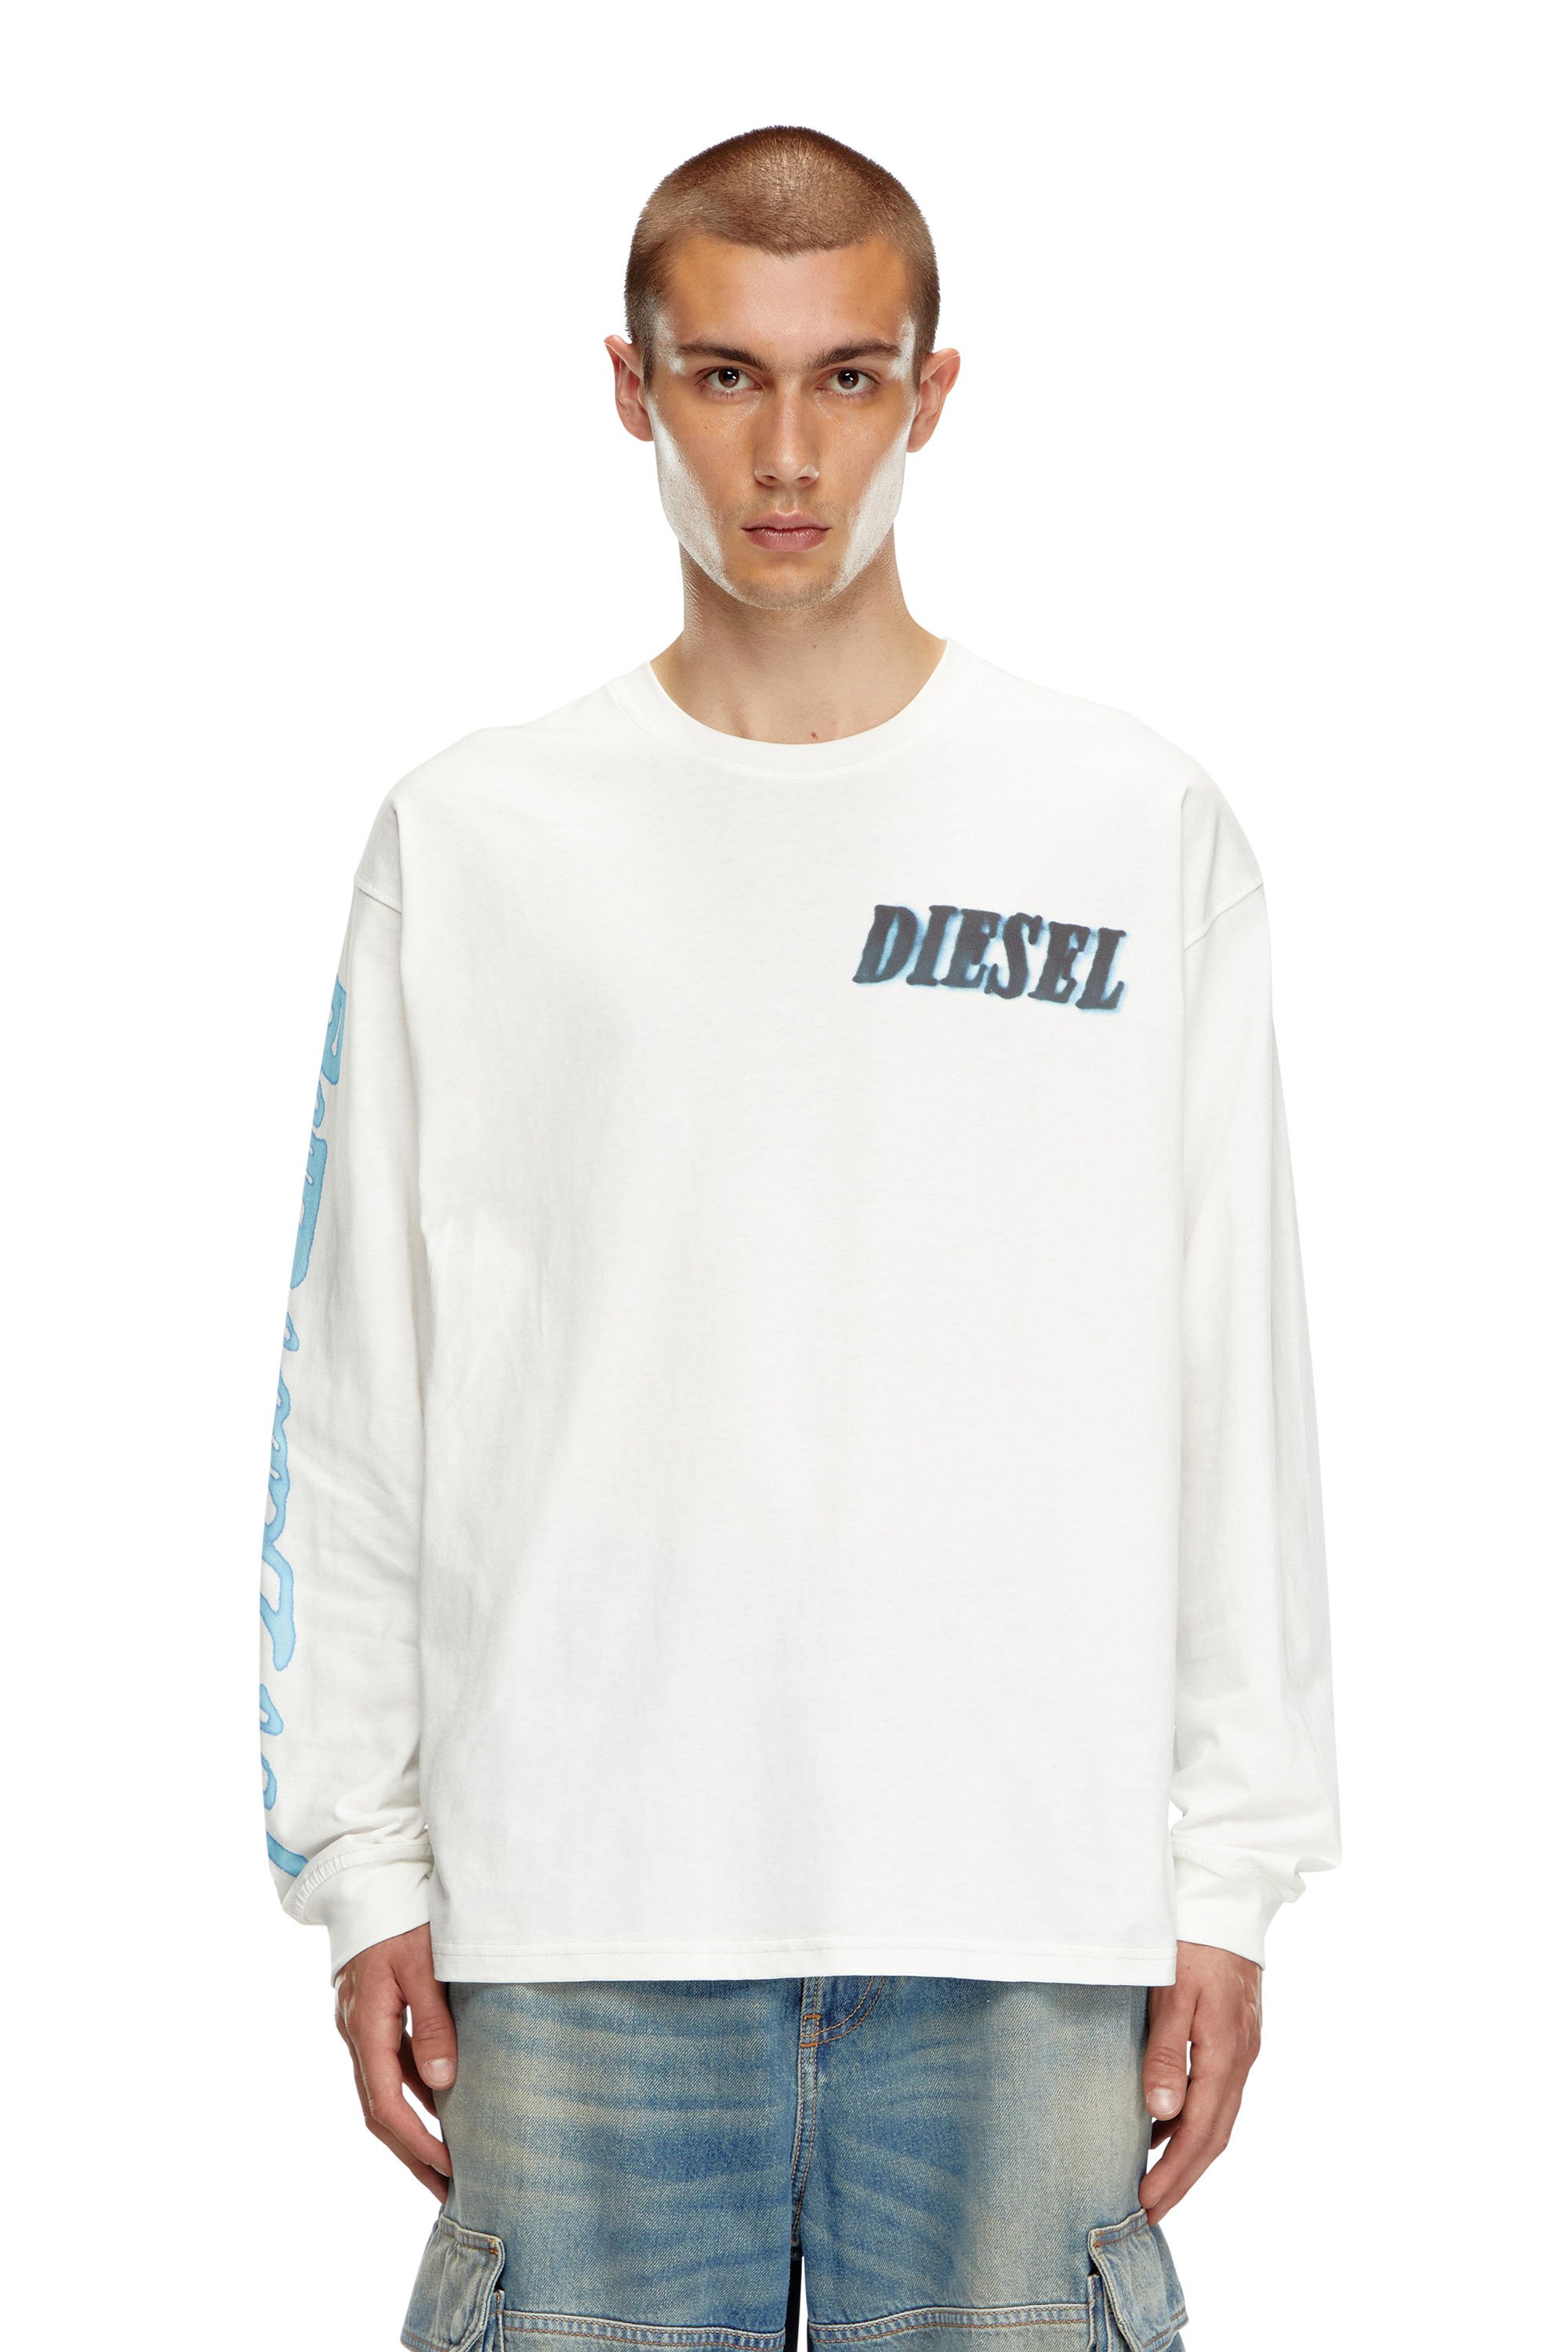 Diesel - T-BOXT-LS-Q15, Hombre Camiseta de manga larga con estampados del logotipo in Blanco - Image 1